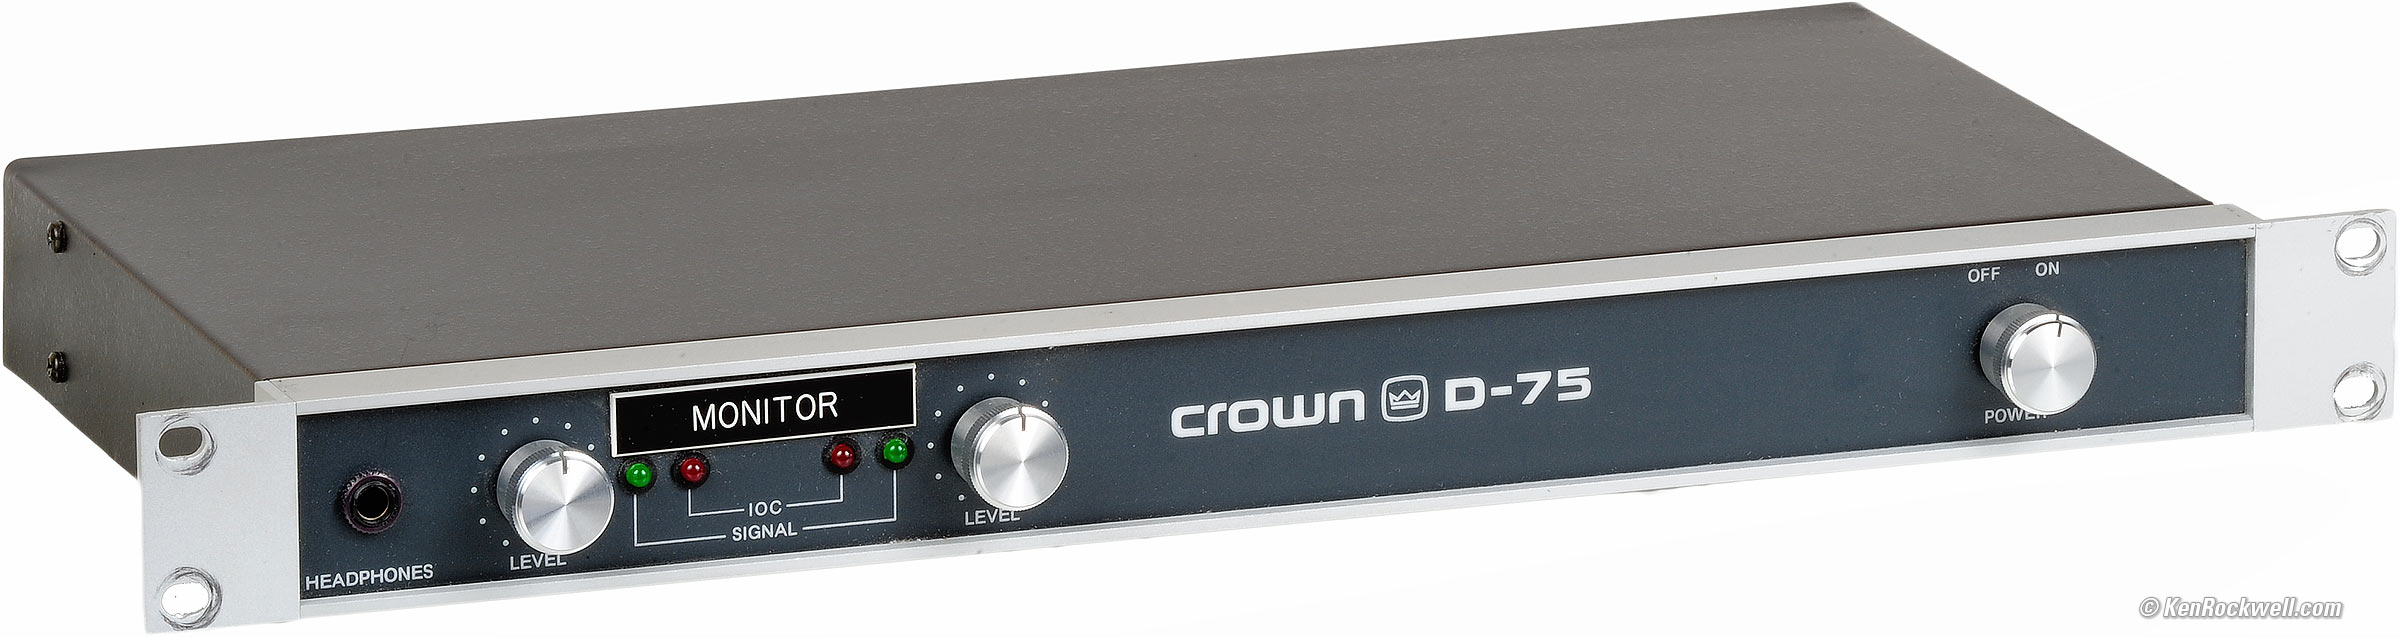 Crown D-75 Review